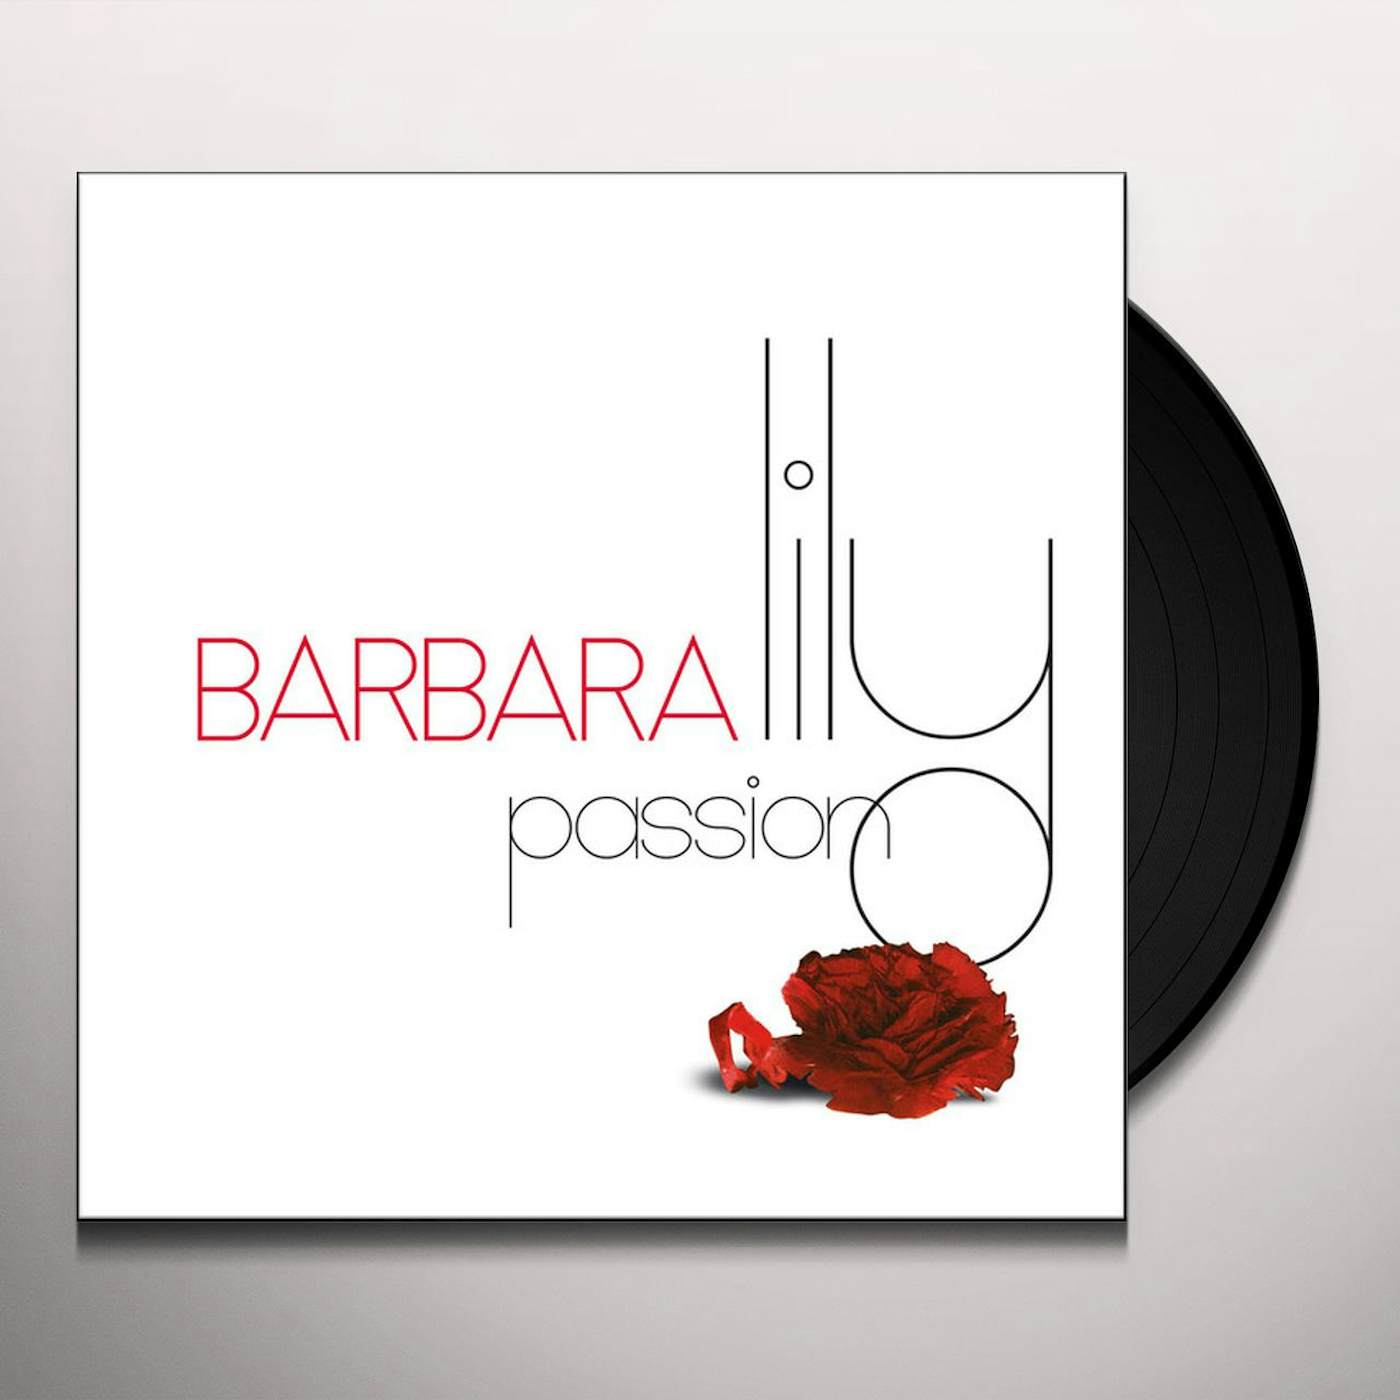 Barbara Lily passion Vinyl Record